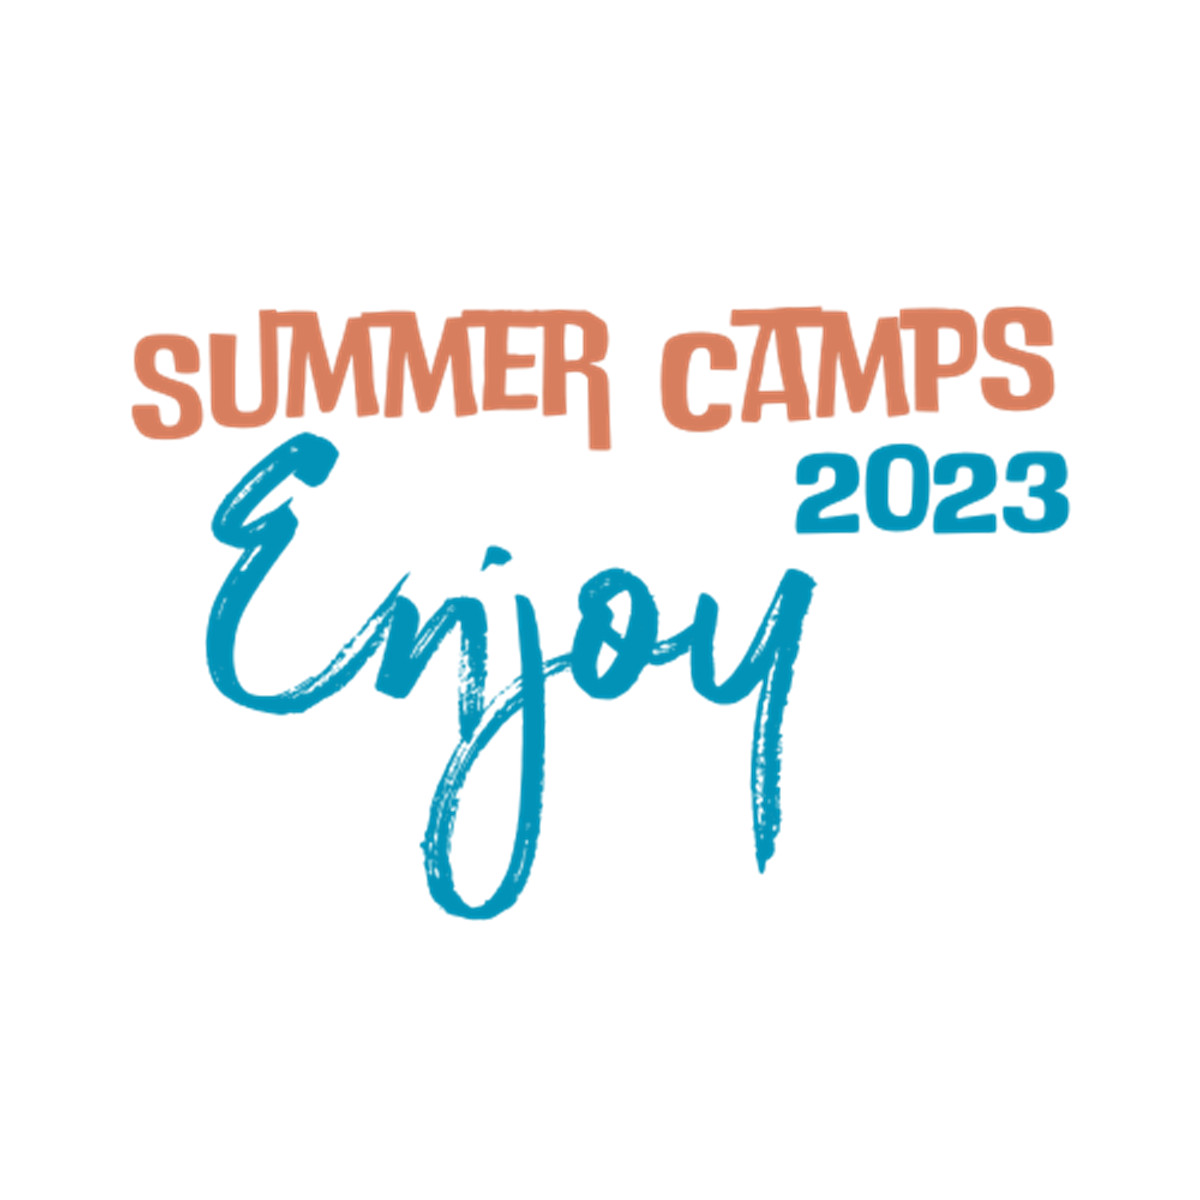 Enjoy! 2023 Summer Camps Resident Registration City of Palo Alto, CA